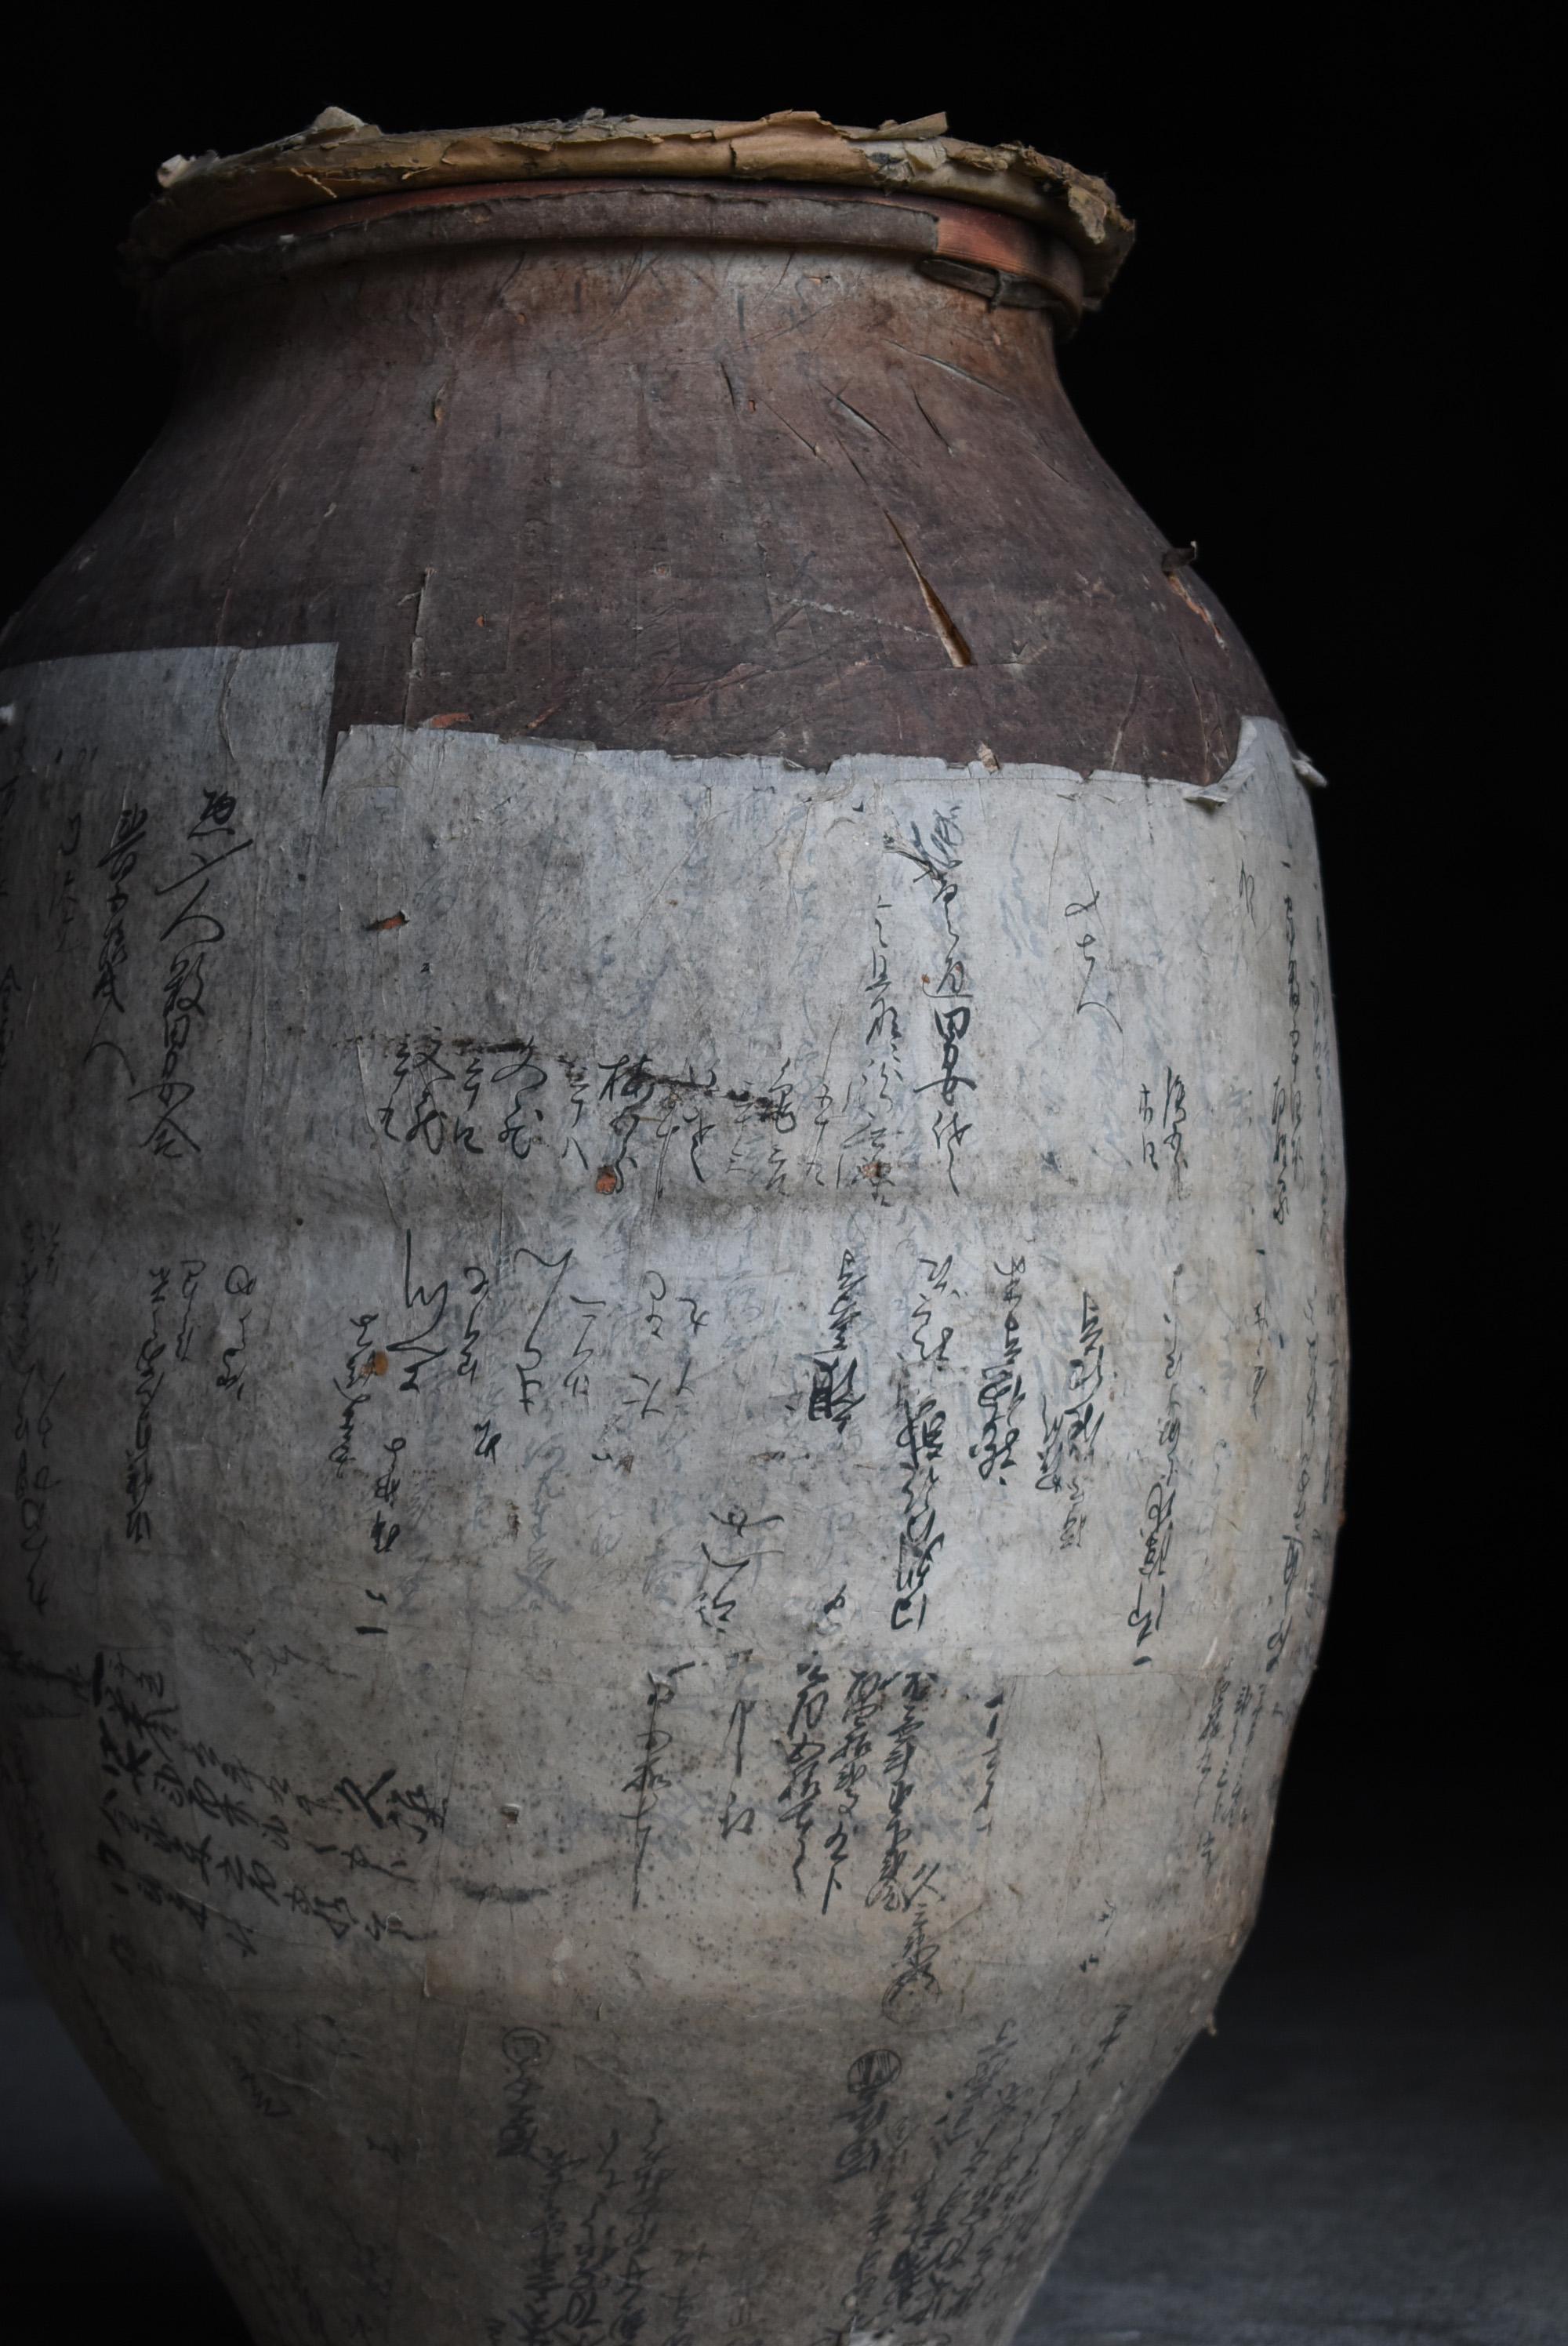 1800s-1900s Japanese Pottery Edo period tsubo wabisabi ceramic jar clay

Size: 430 F H 690.